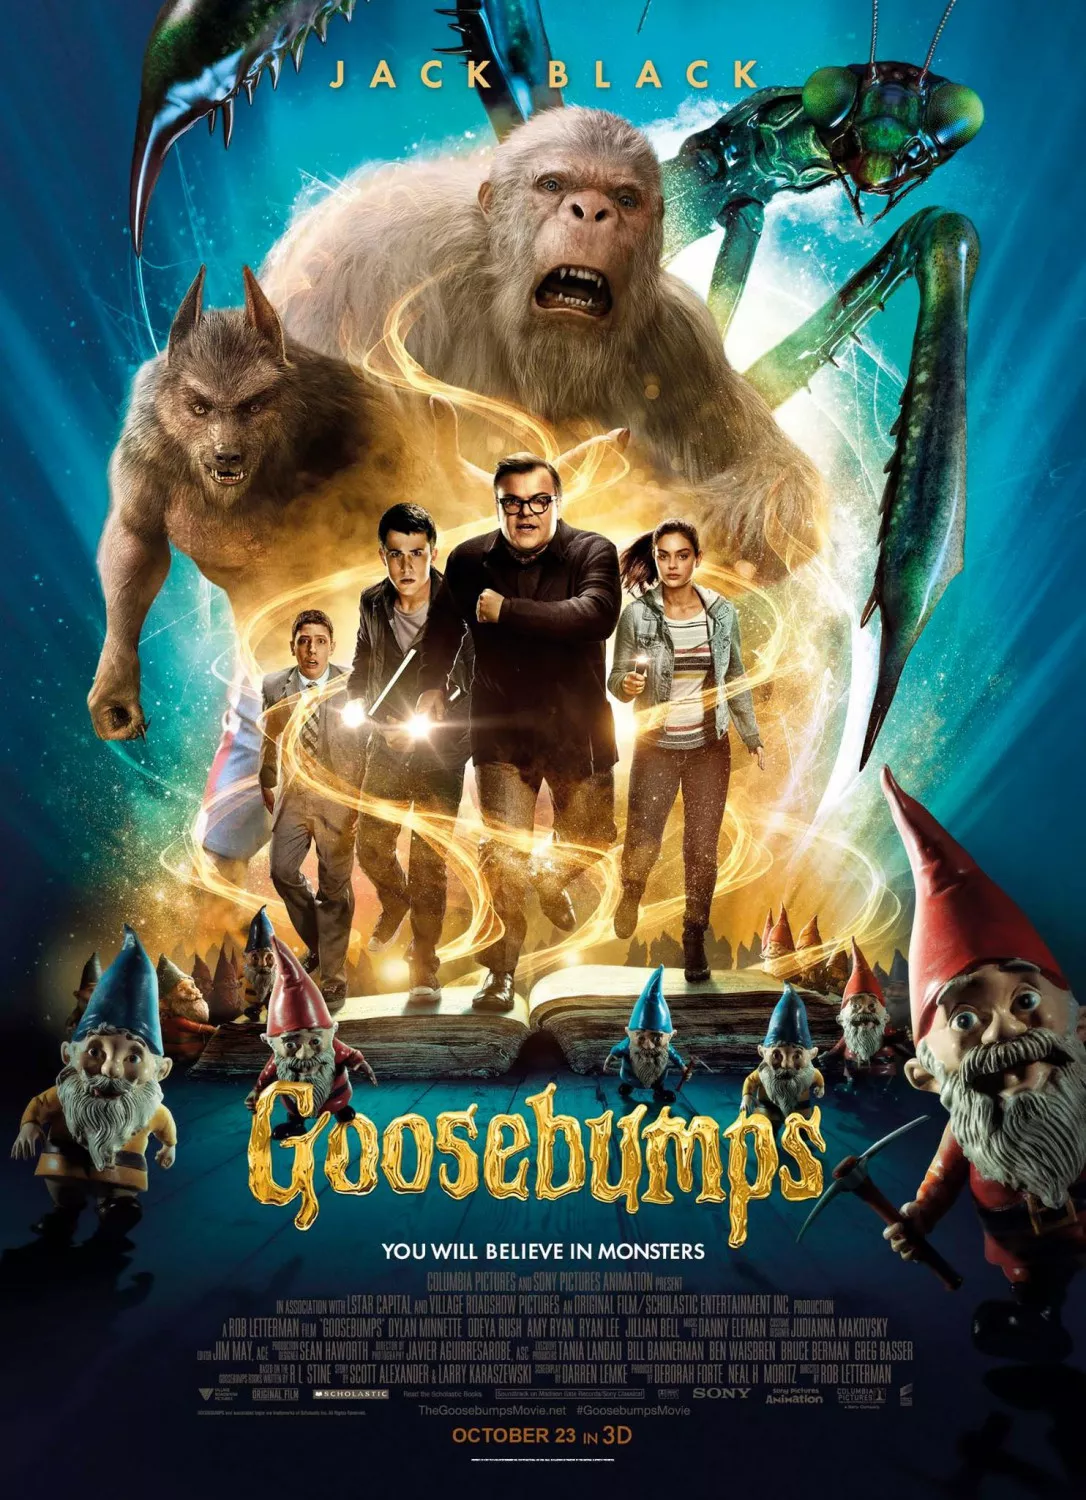 Goosebumps (2015) คืนอัศจรรย์ขนหัวลุก